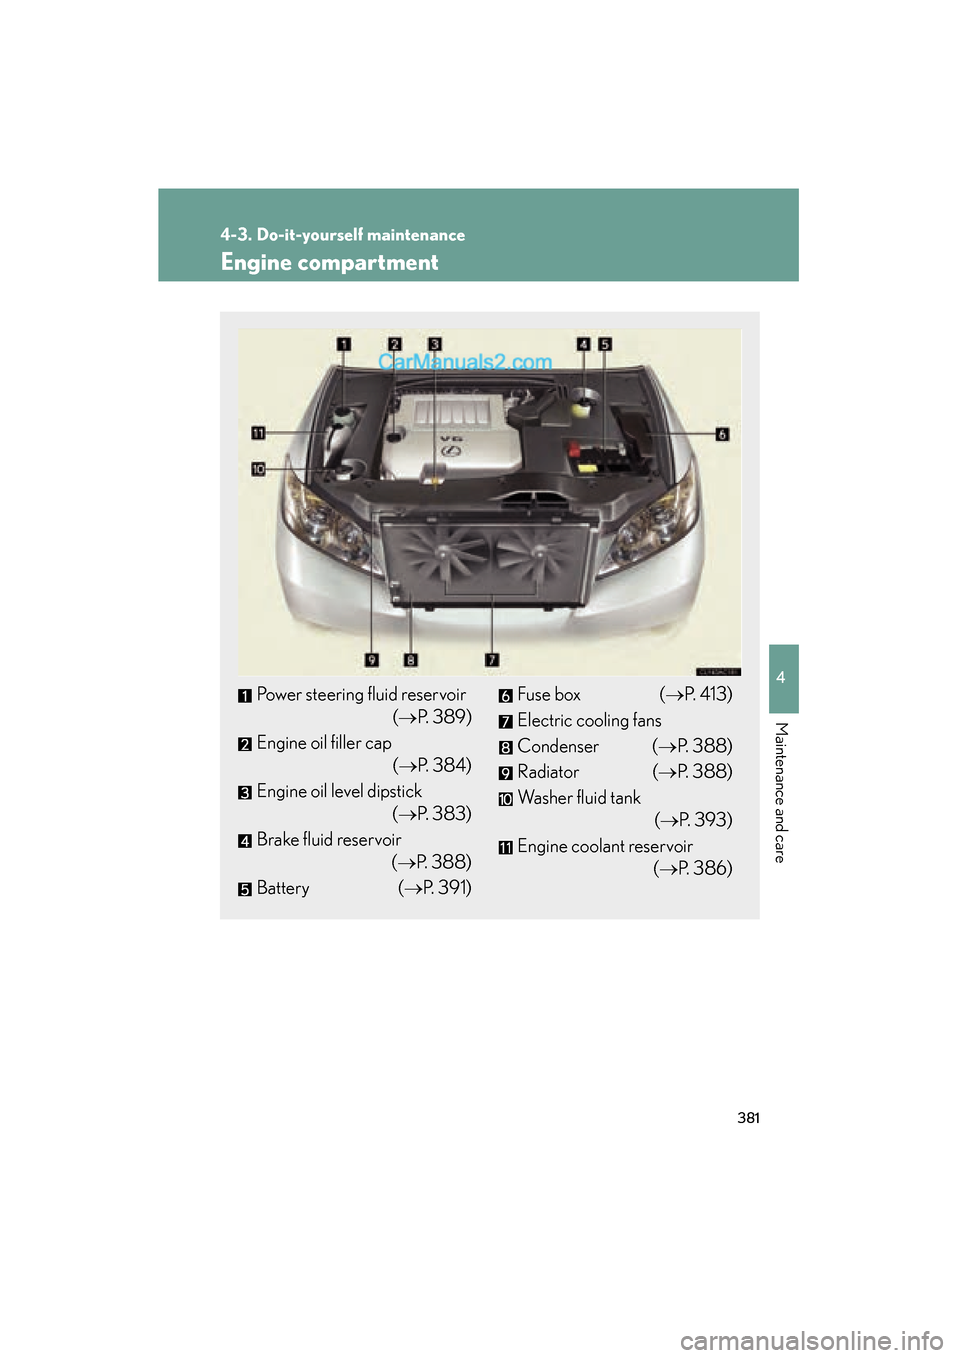 Lexus ES350 2011  Owners Manuals 381
4-3. Do-it-yourself maintenance
4
Maintenance and care
ES350_U
Engine compartment
Power steering fluid reservoir(→P. 389)
Engine oil filler cap (→P. 384)
Engine oil level dipstick (→P. 383)
